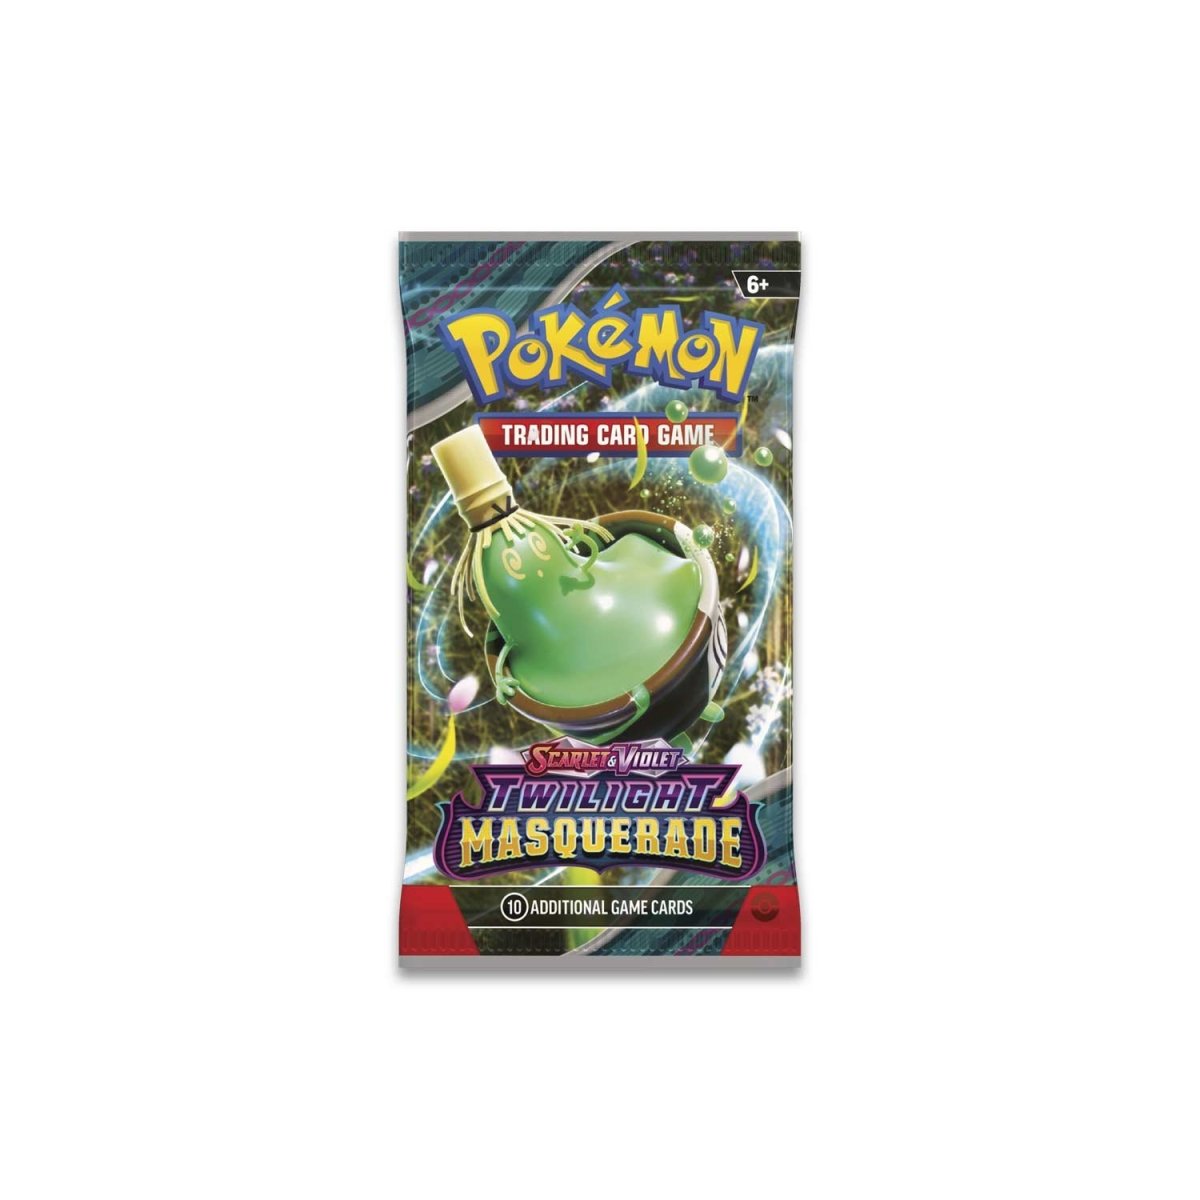 Pokémon: Scarlet & Violet-Twilight Masquerade Booster Pack (10 Cards)